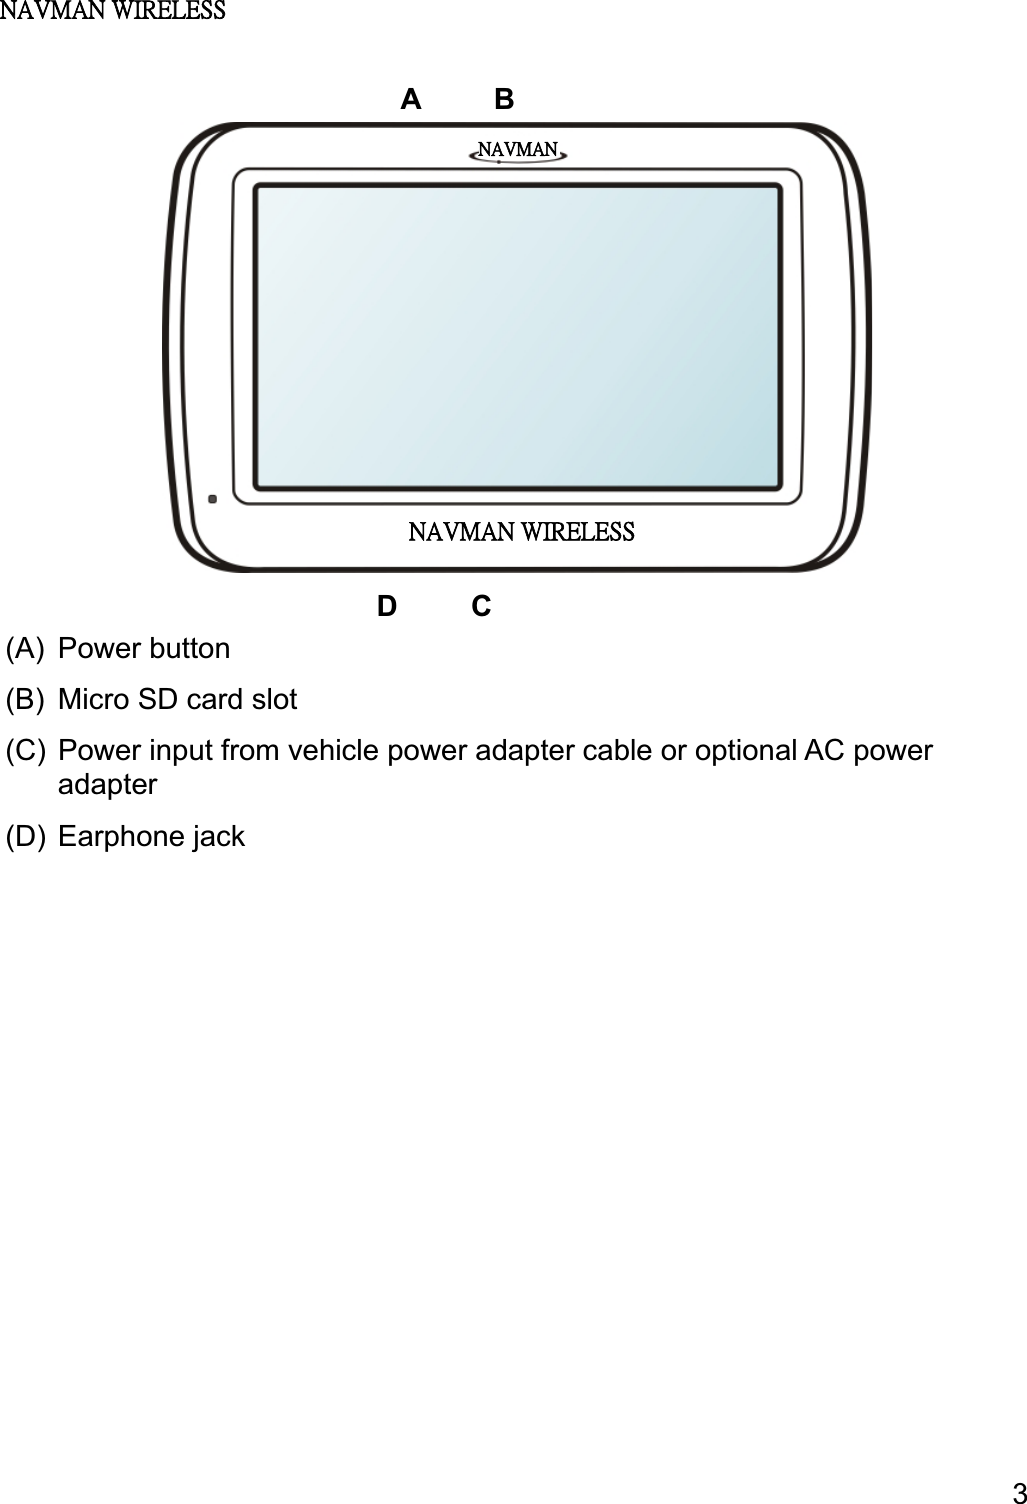 3Magellan RoadMate (A) Power button  (B)  Micro SD card slot (C)  Power input from vehicle power adapter cable or optional AC power adapter (D) Earphone jack A     BD     C ˡ˔˩ˠ˔ˡʳ˪˜˥˘˟˘˦˦ˡ˔˩ˠ˔ˡˡ˔˩ˠ˔ˡʳ˪˜˥˘˟˘˦˦